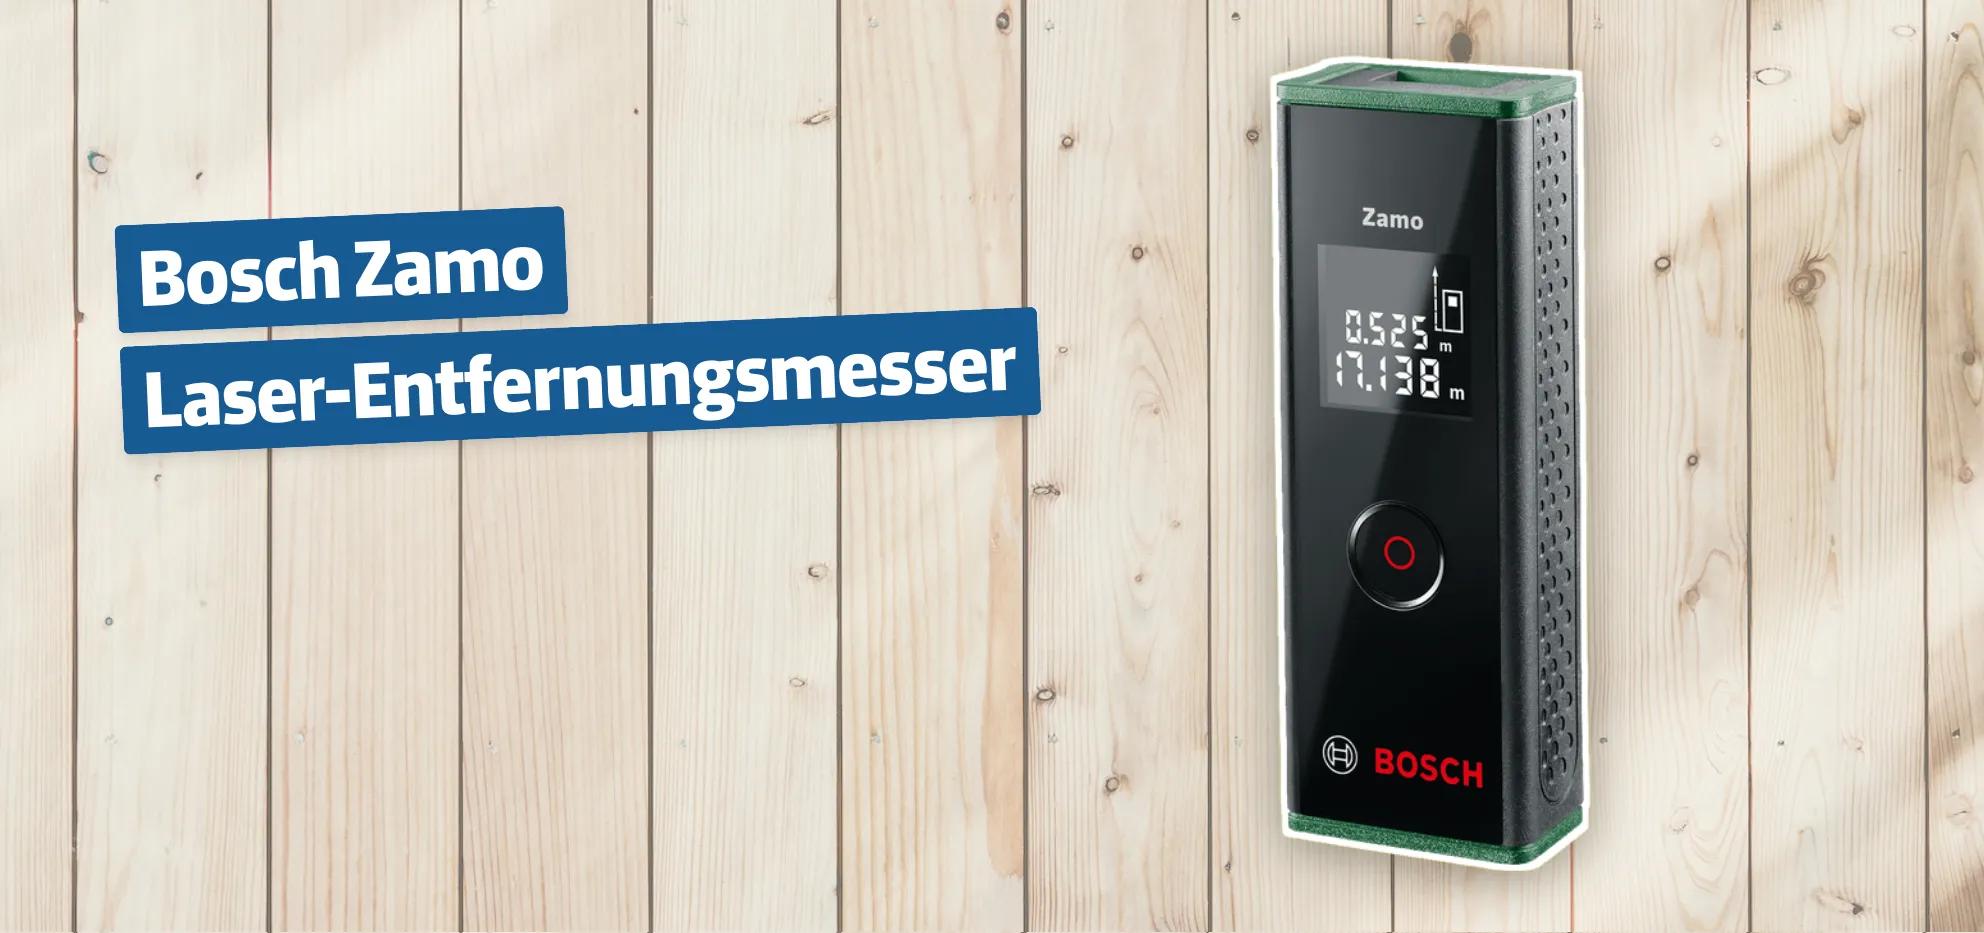 Bosch Zamo Laser-Entfernungsmesser